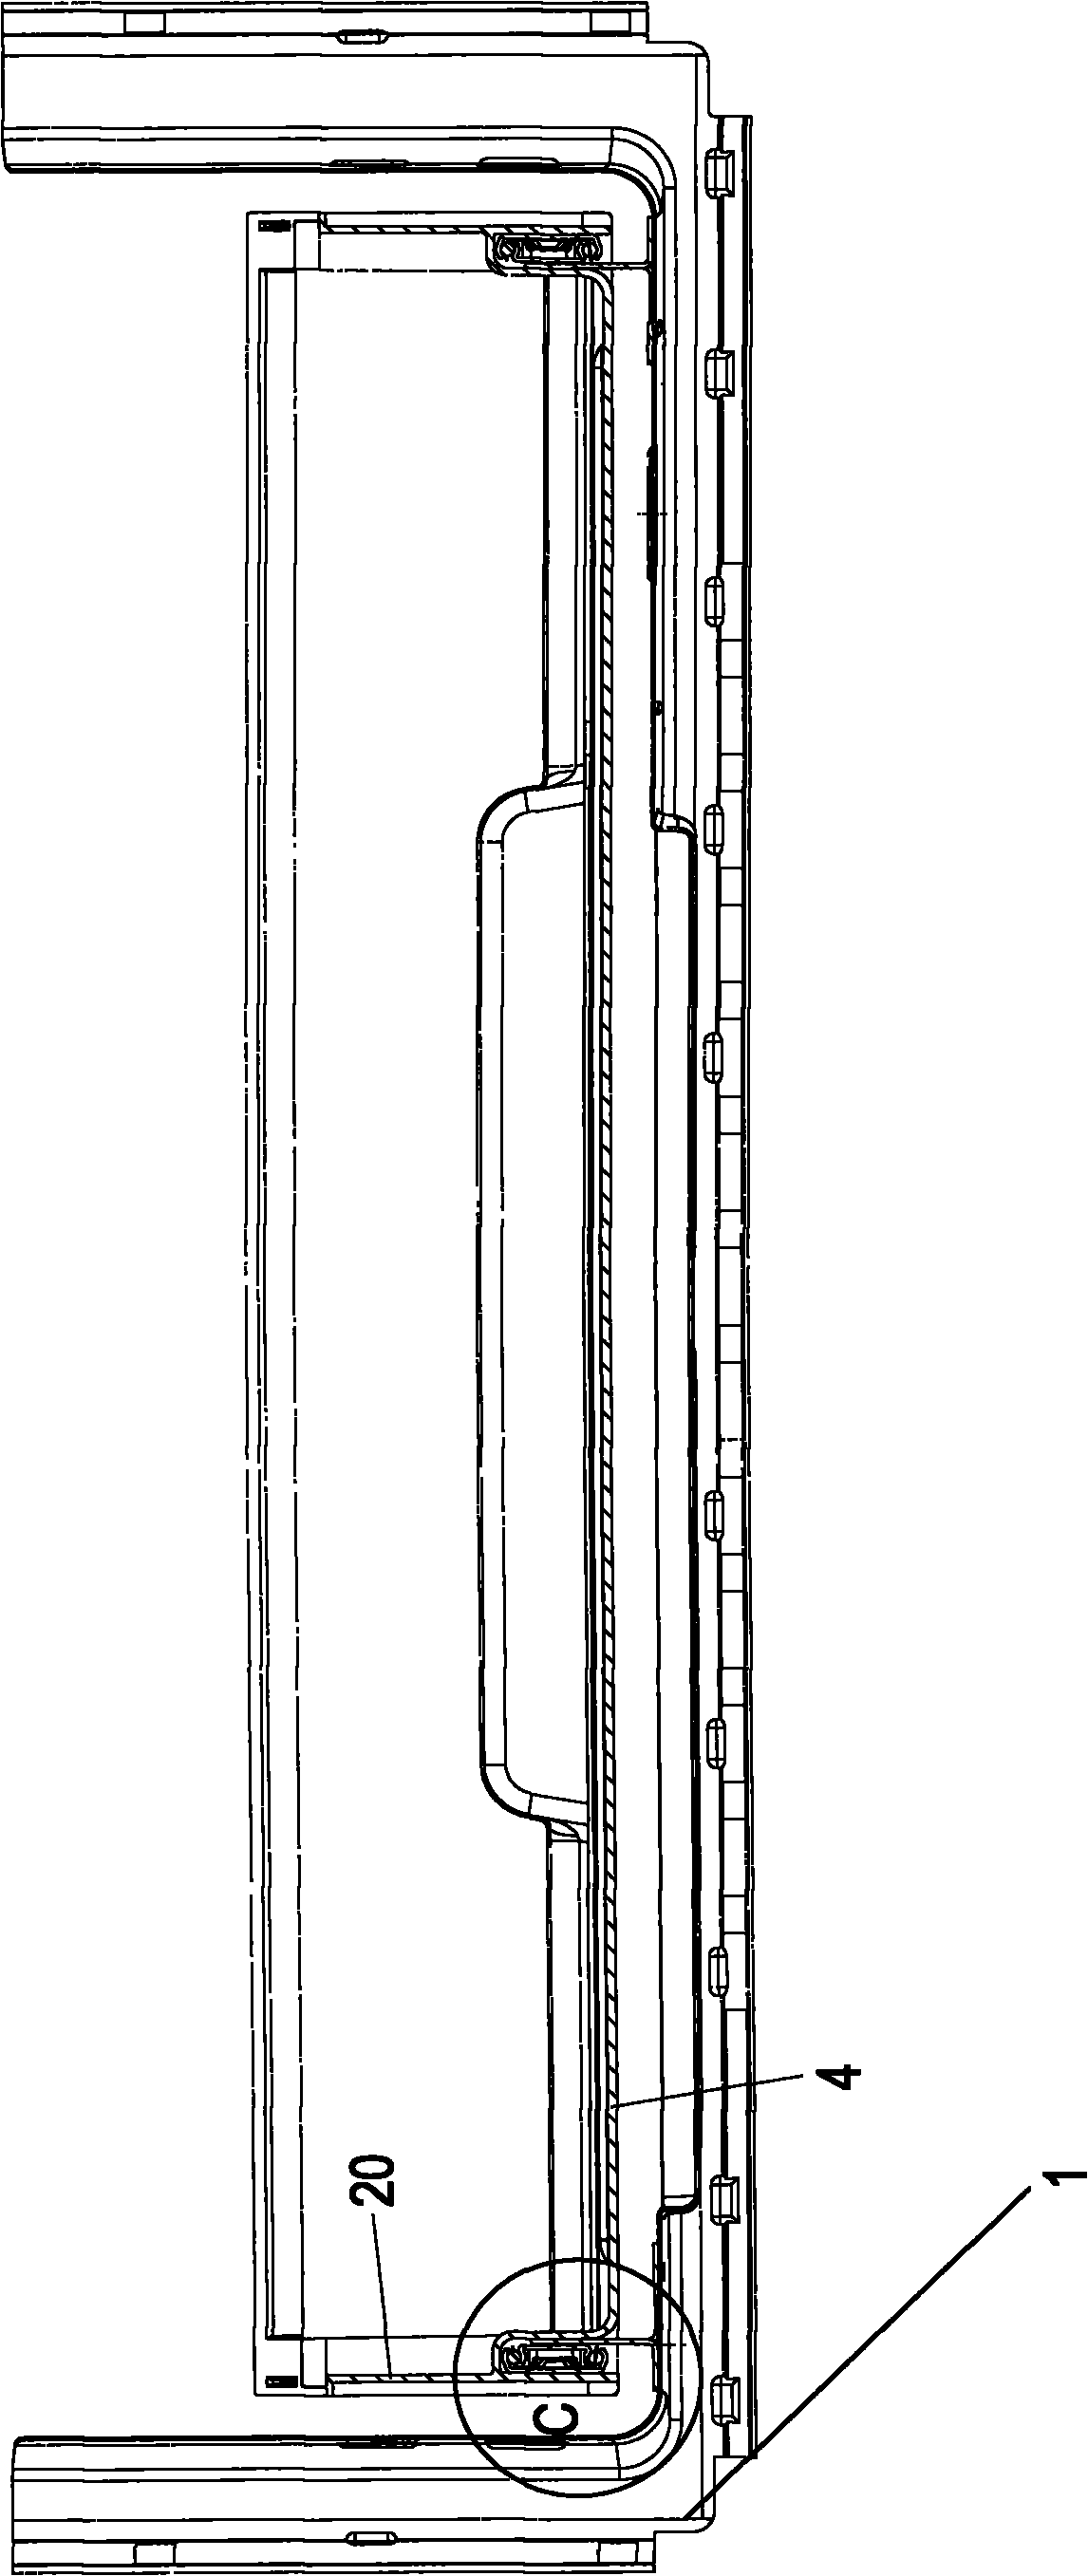 Sliding rail system for refrigerator drawer